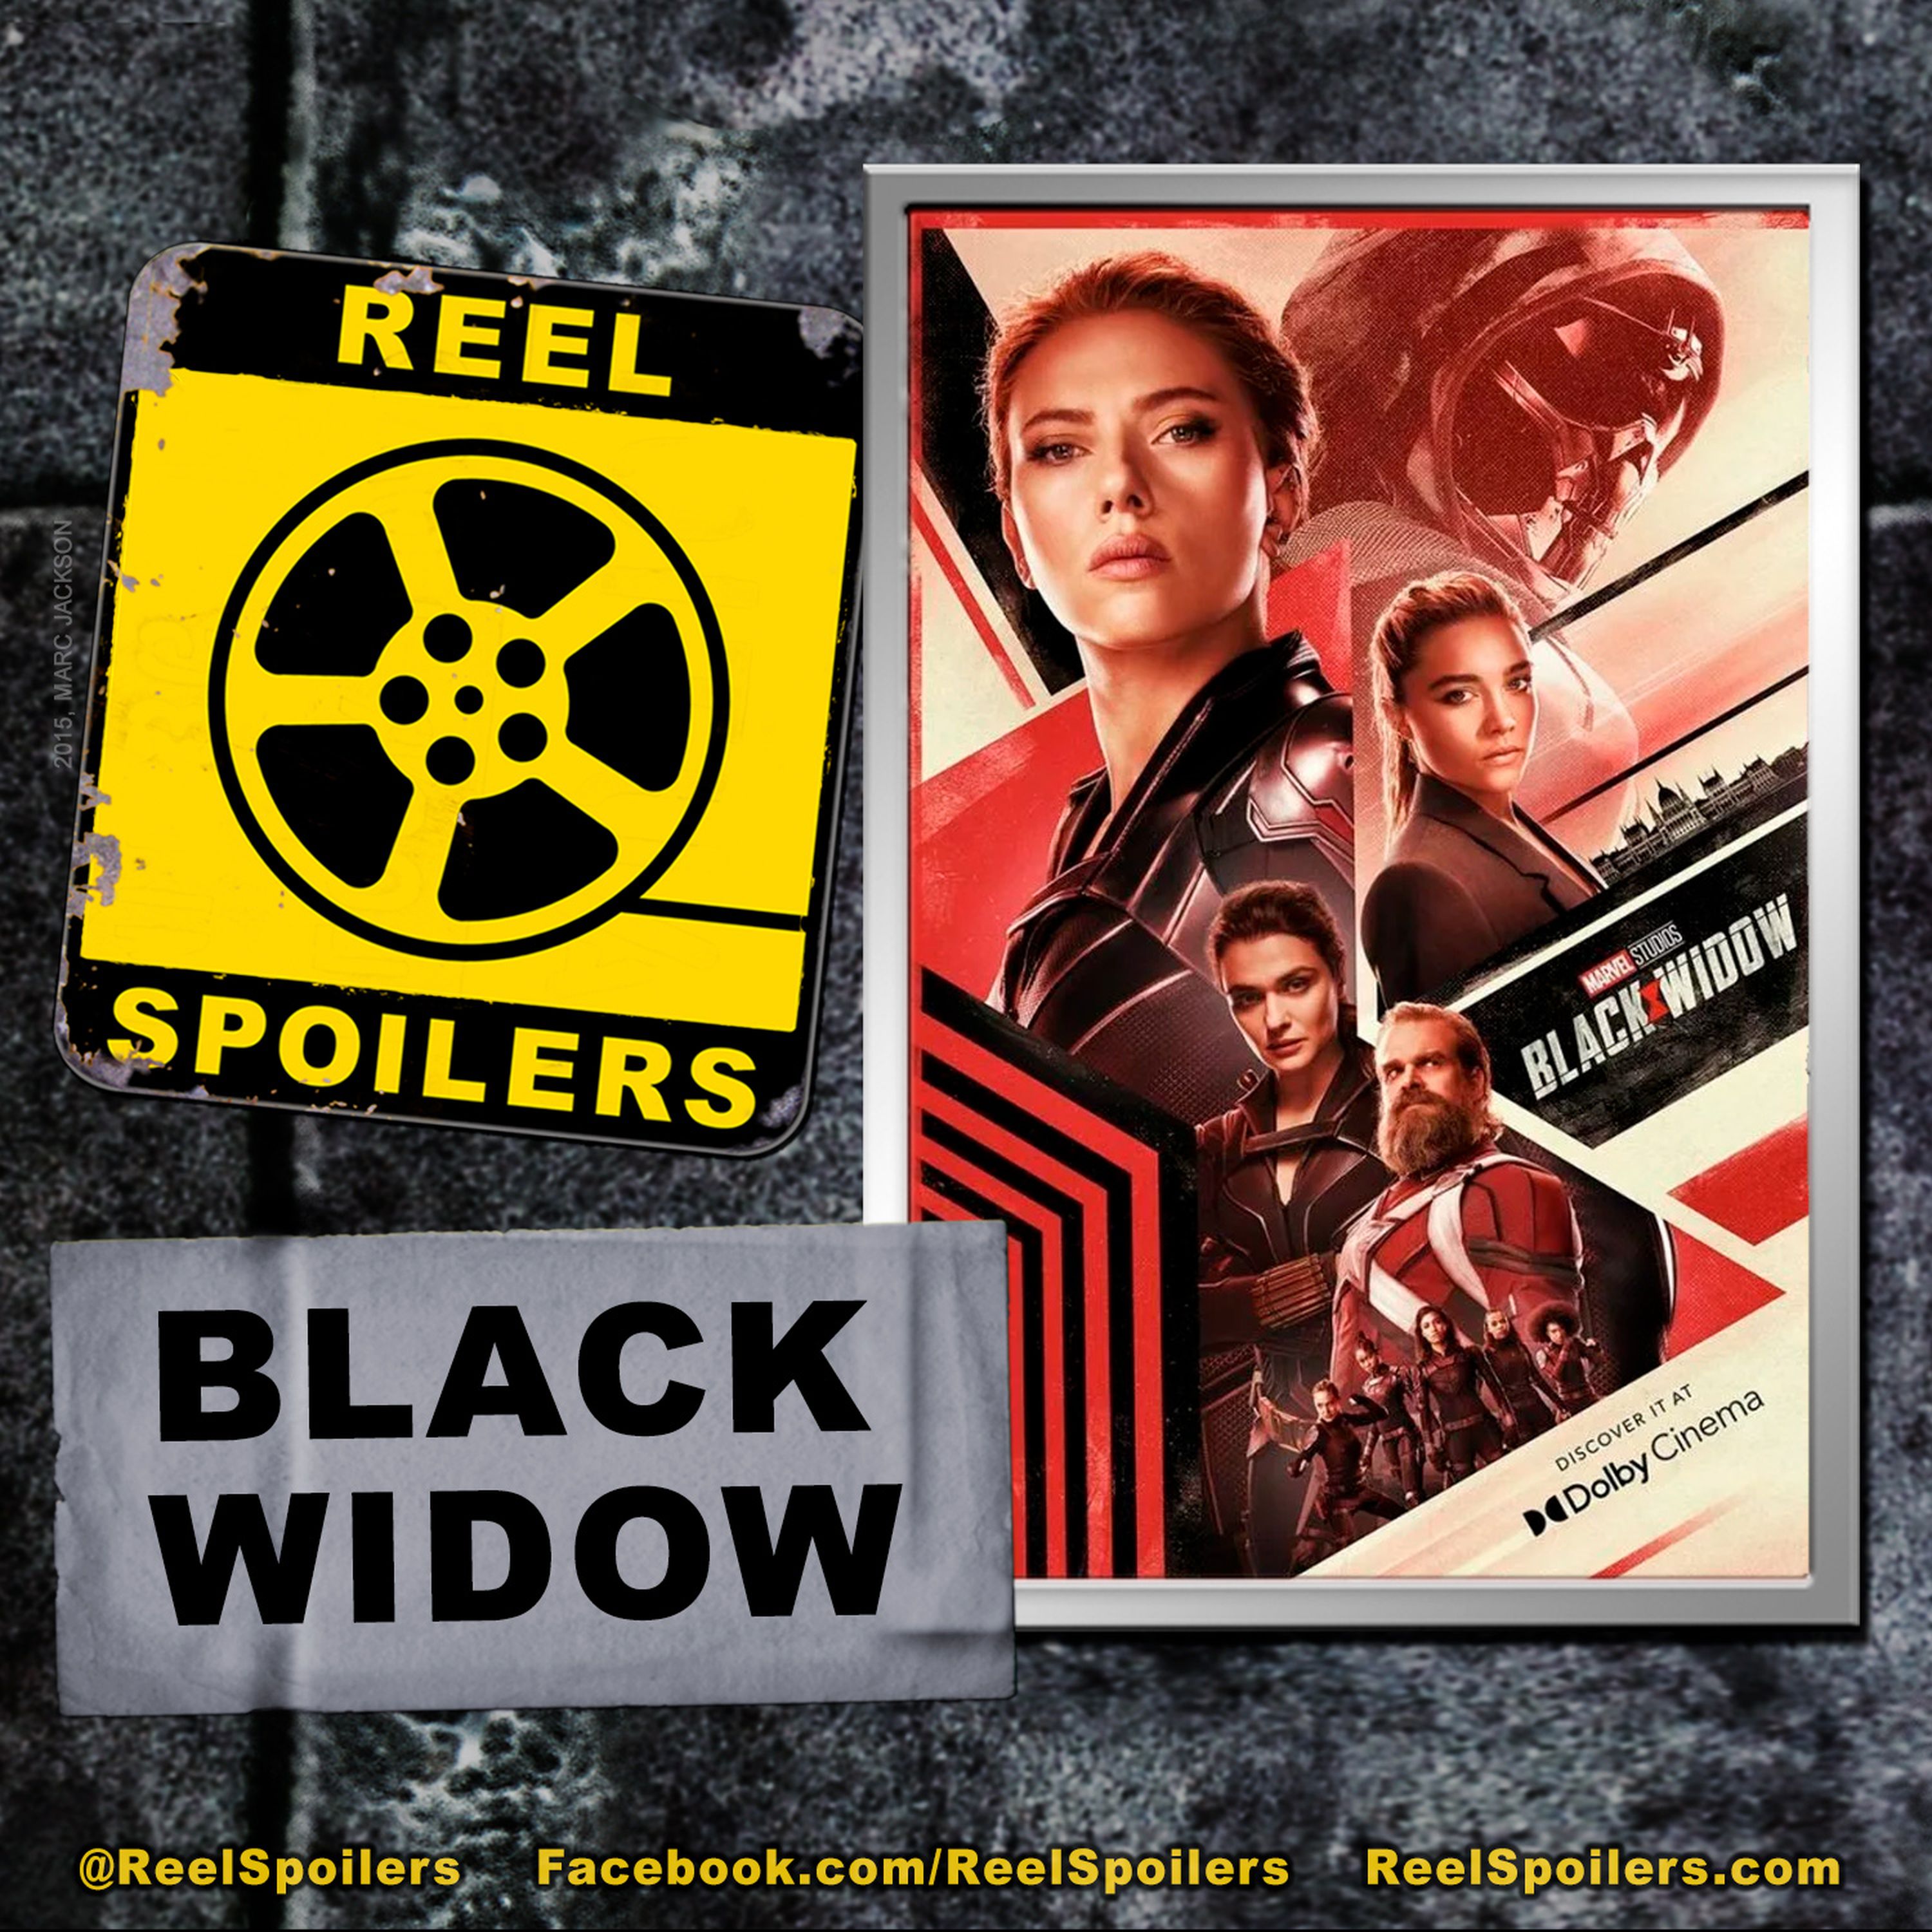 Marvel's BLACK WIDOW Starring Scarlett Johansson, Florence Pugh, David Harbor Image